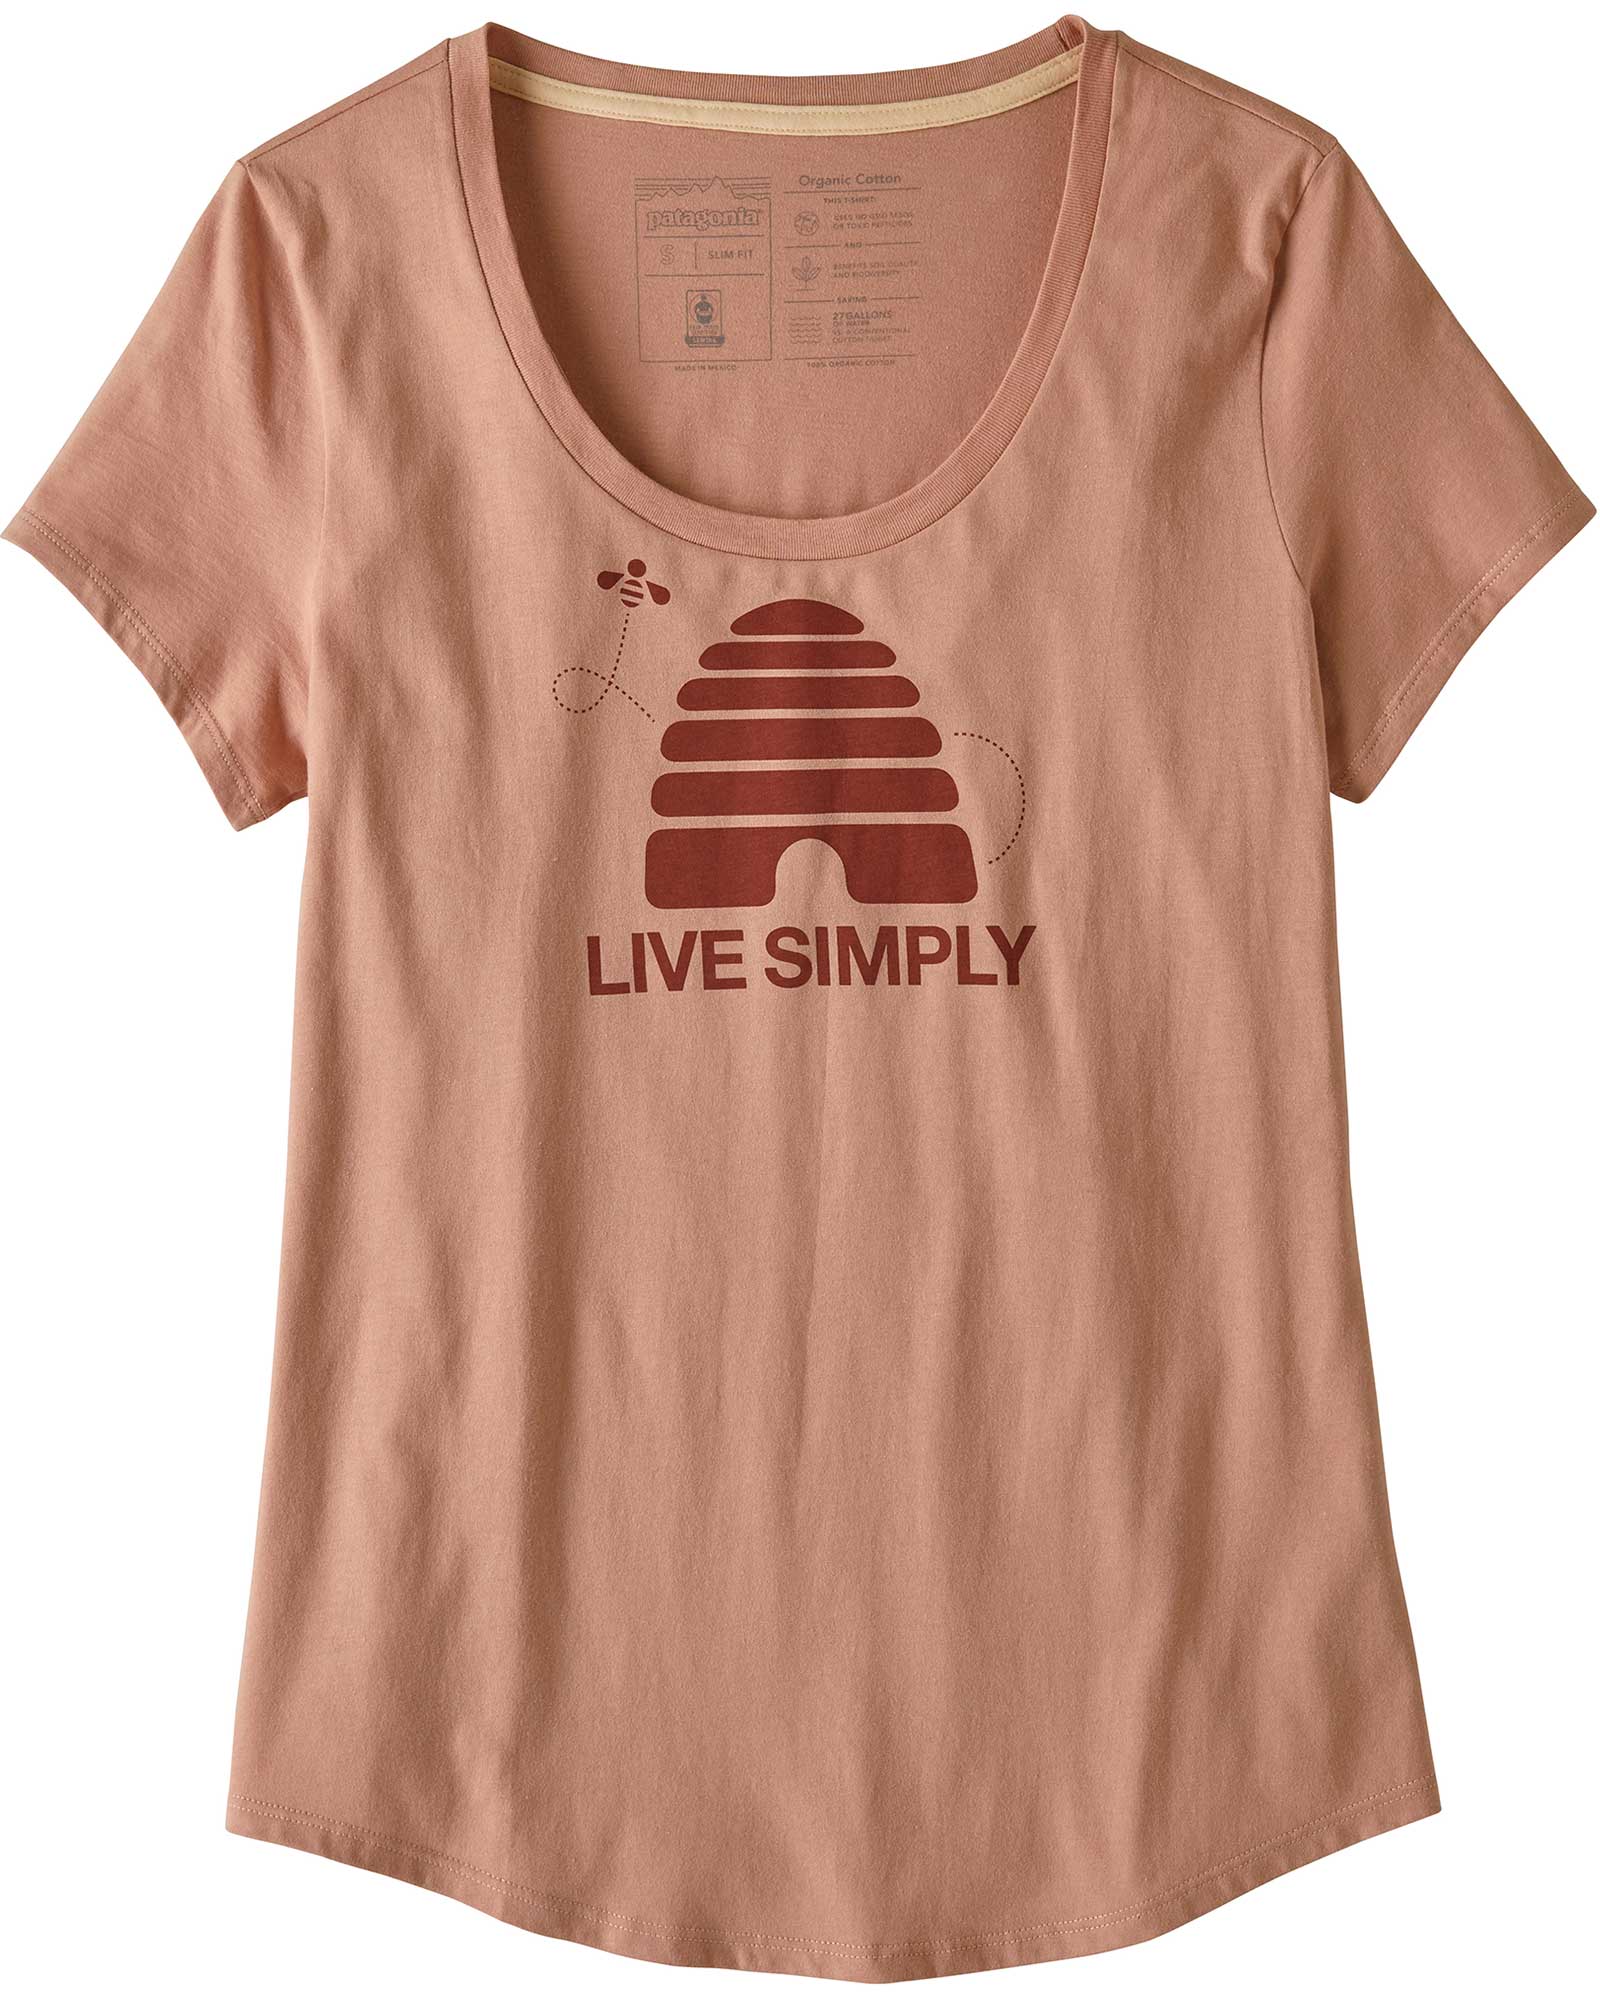 Patagonia Live Simply Hive Organic Women’s Scoop T Shirt - Scotch Pink XS